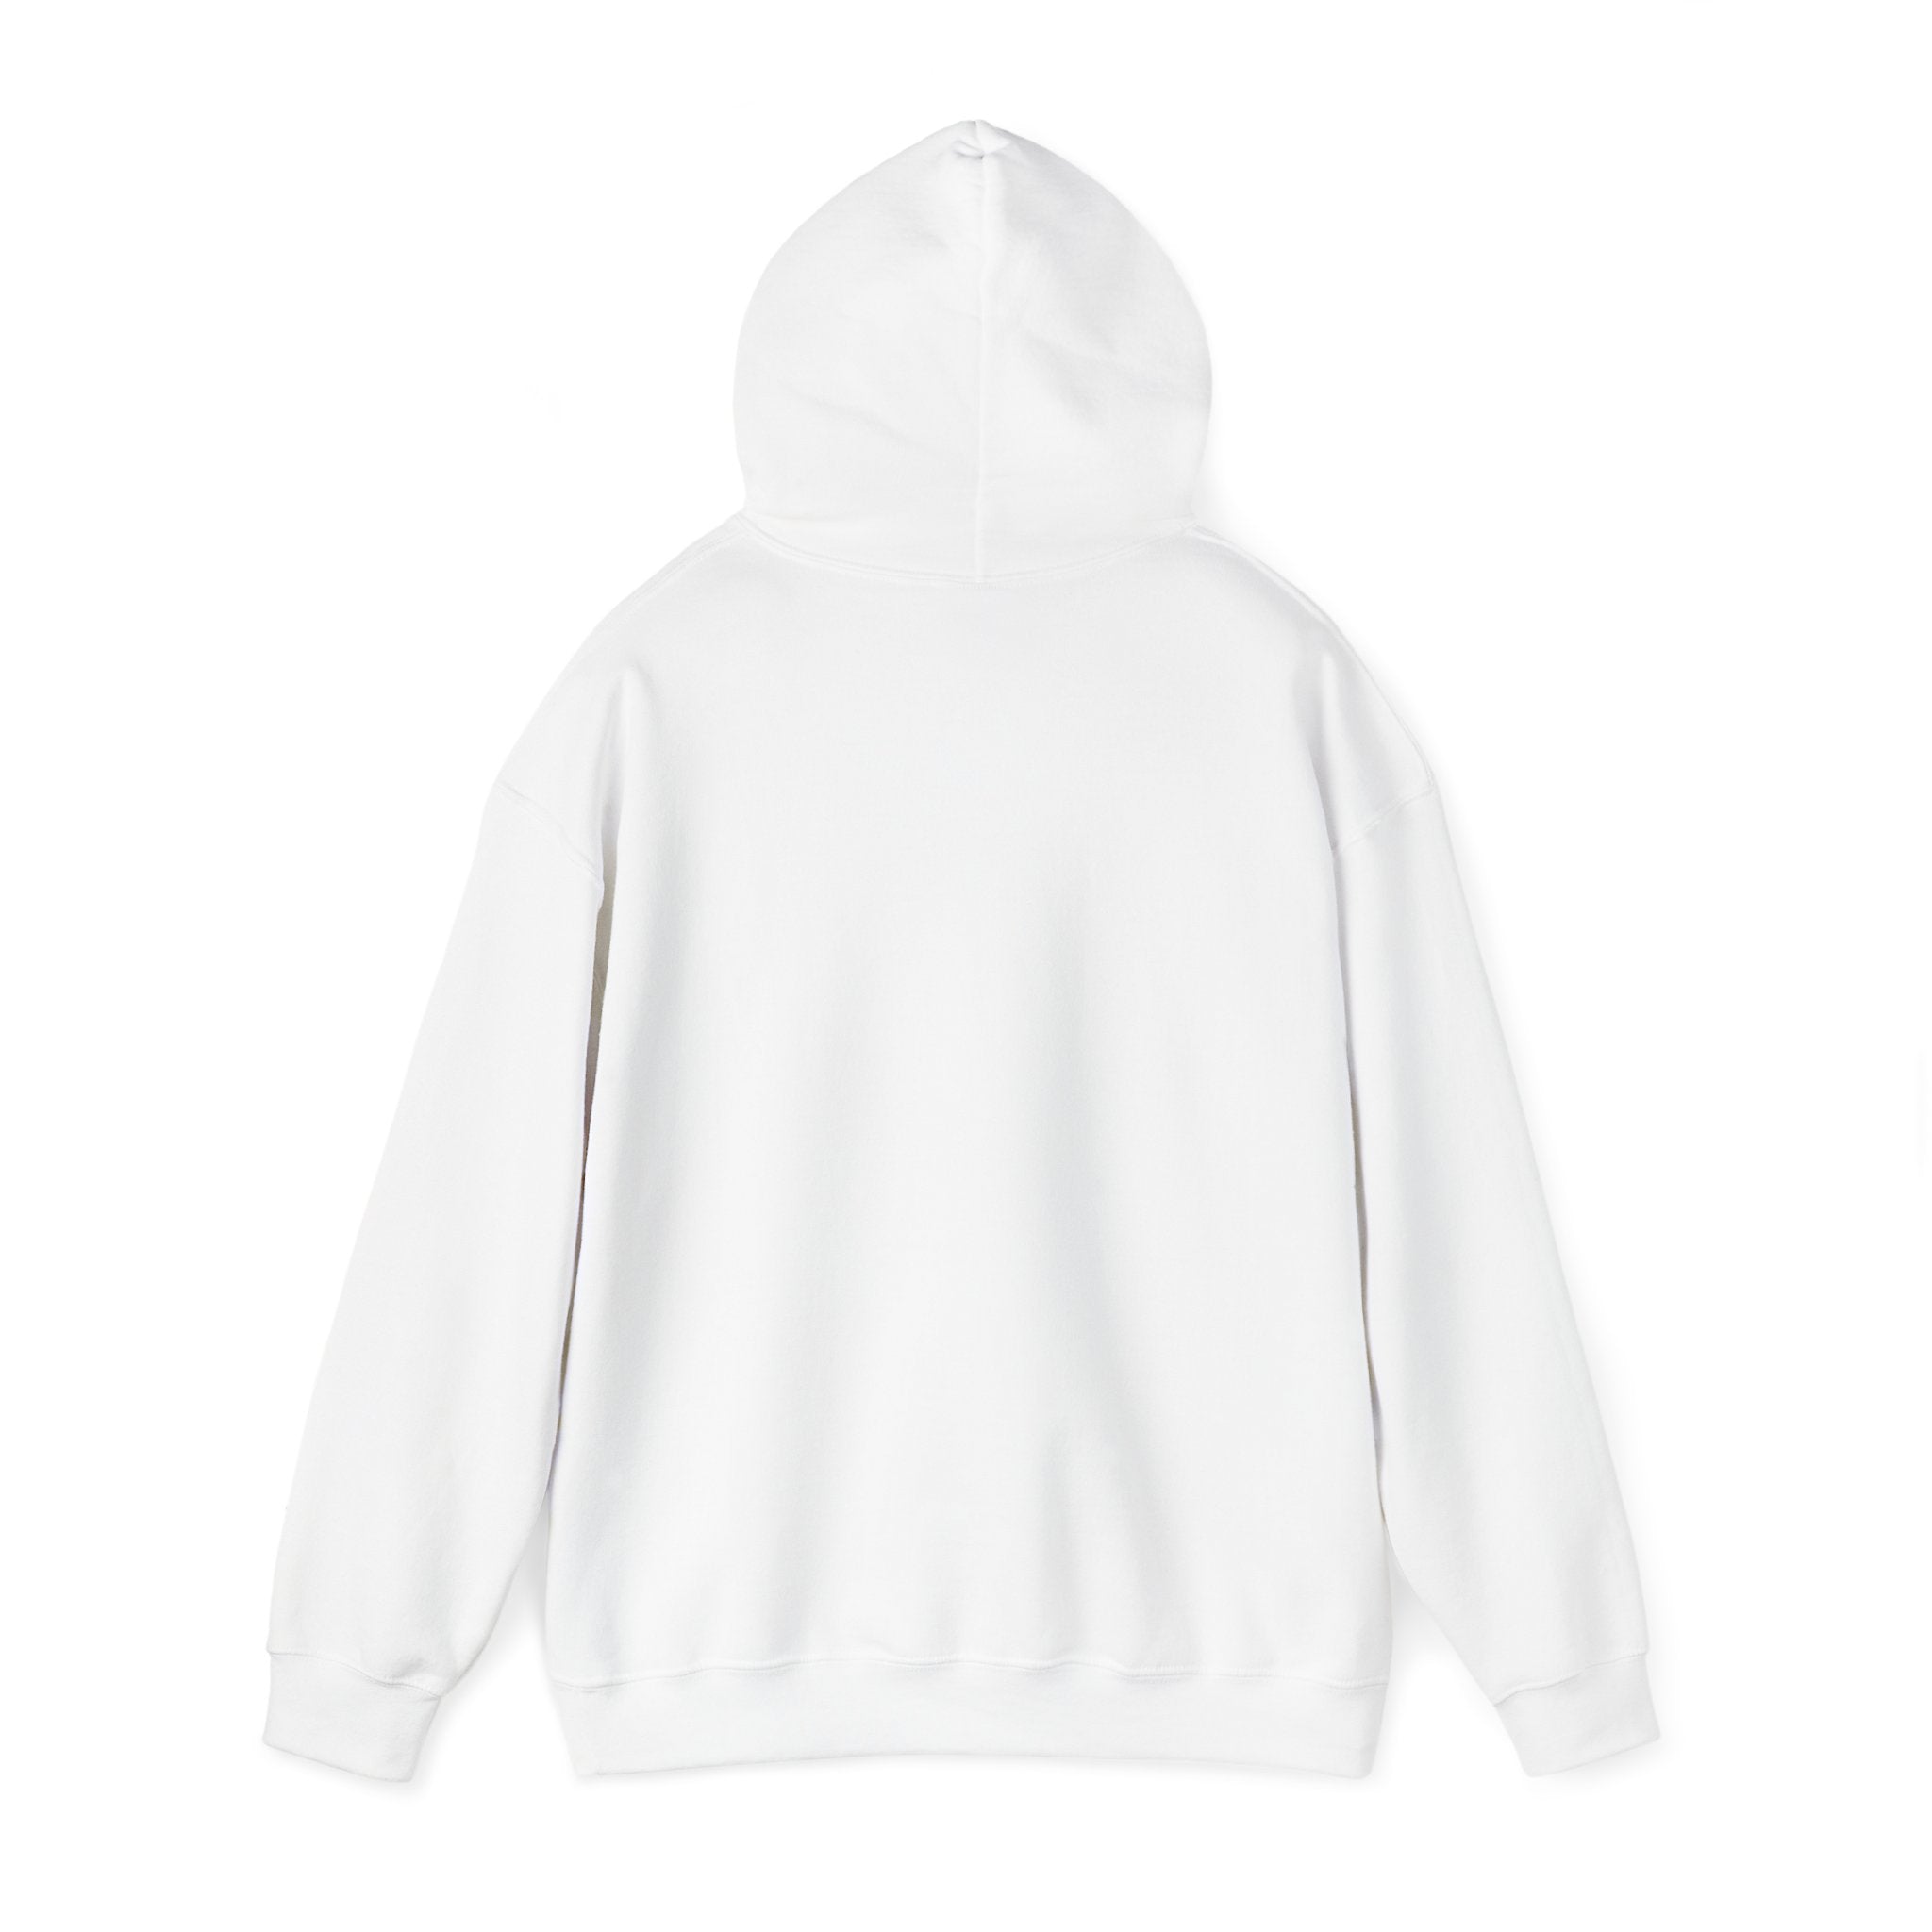 #4006 White Hooded Sweatshirt